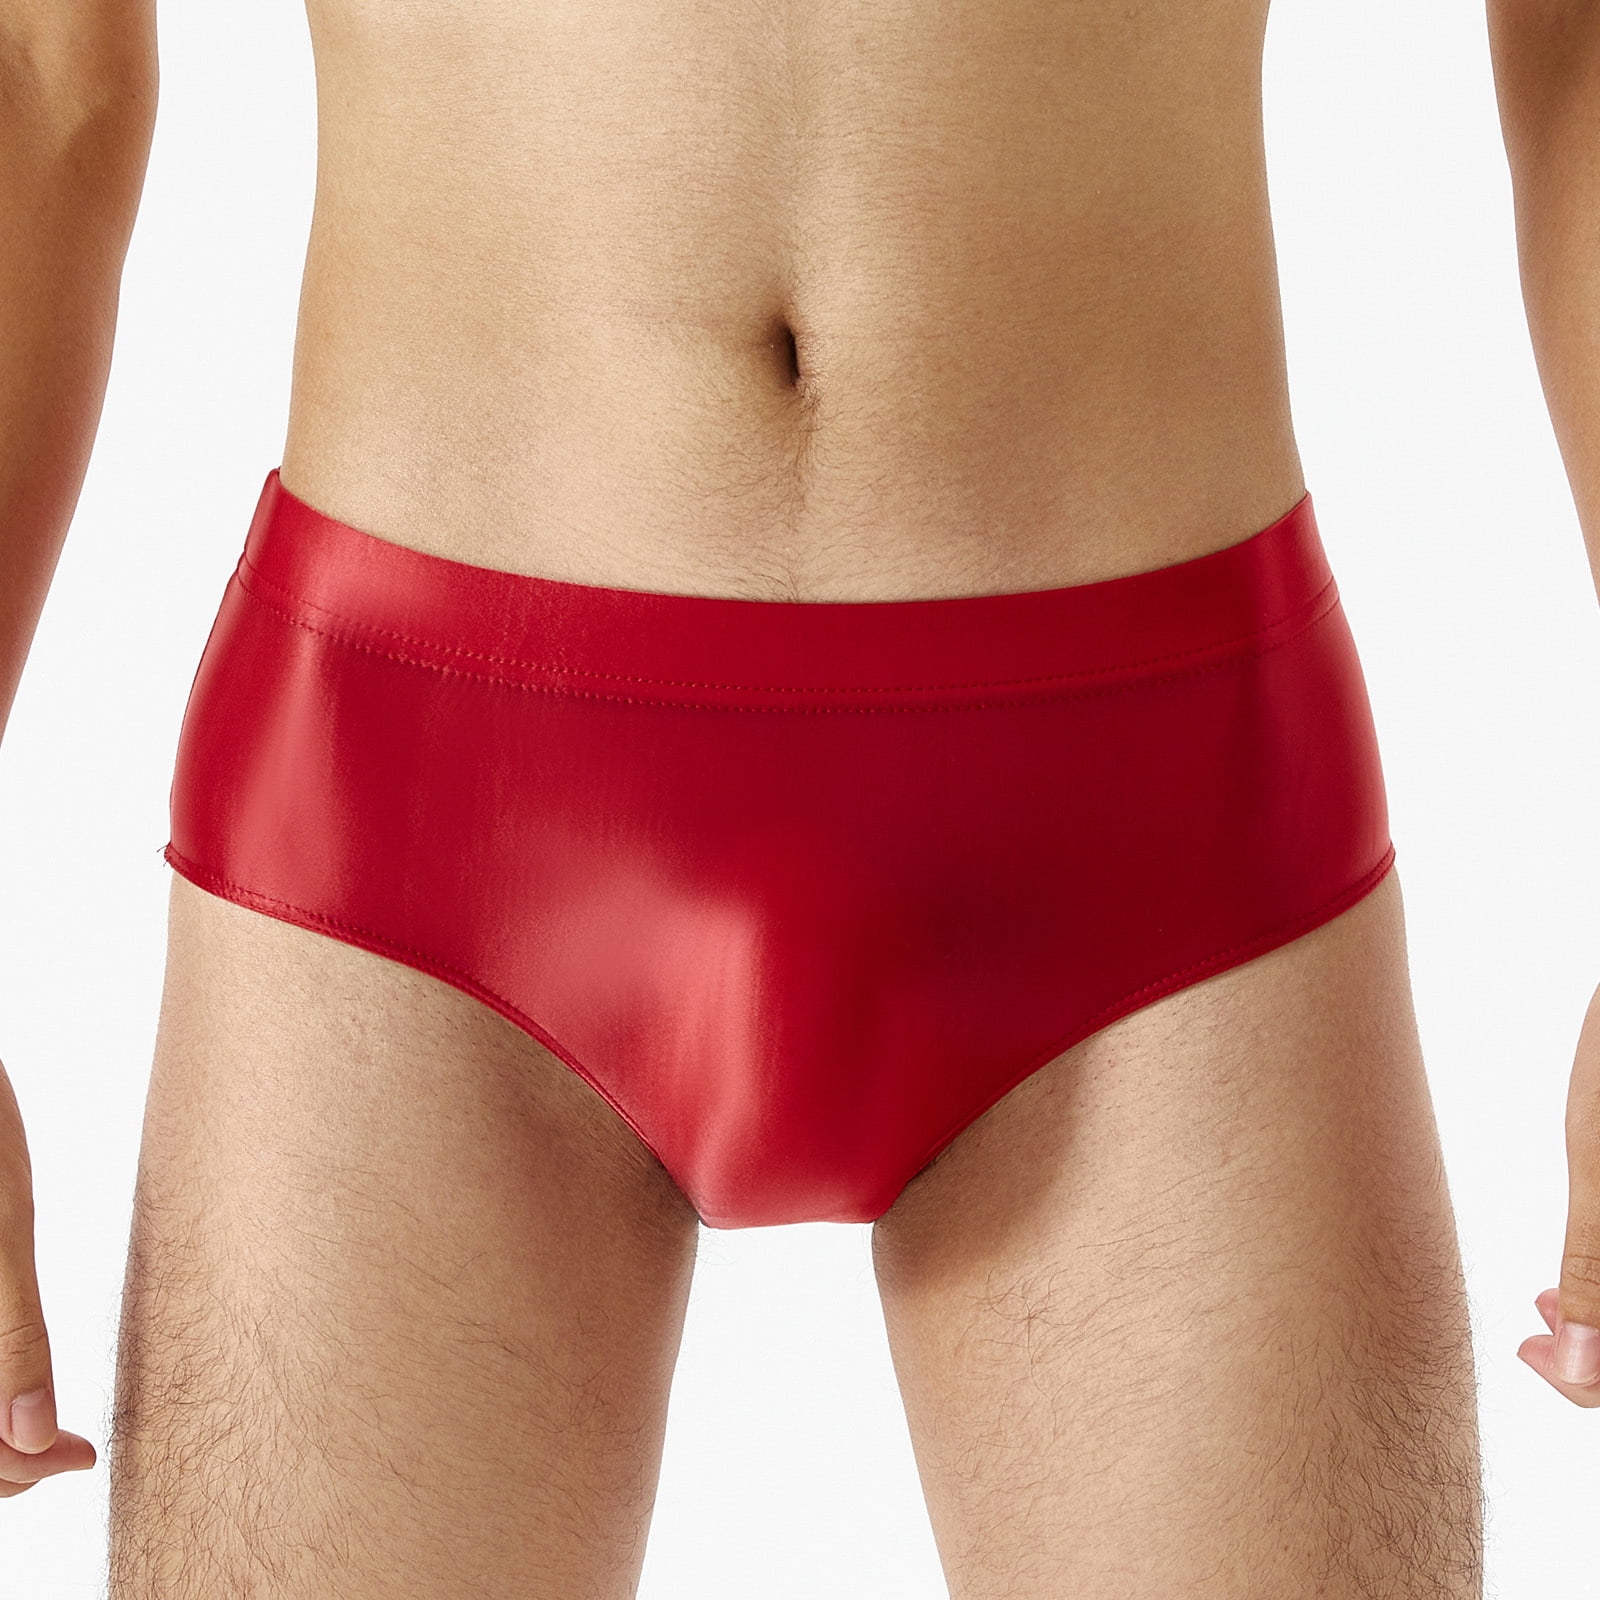 Men Glossy Briefs Swimming Panties Smooth Nylon Low Rise Thong